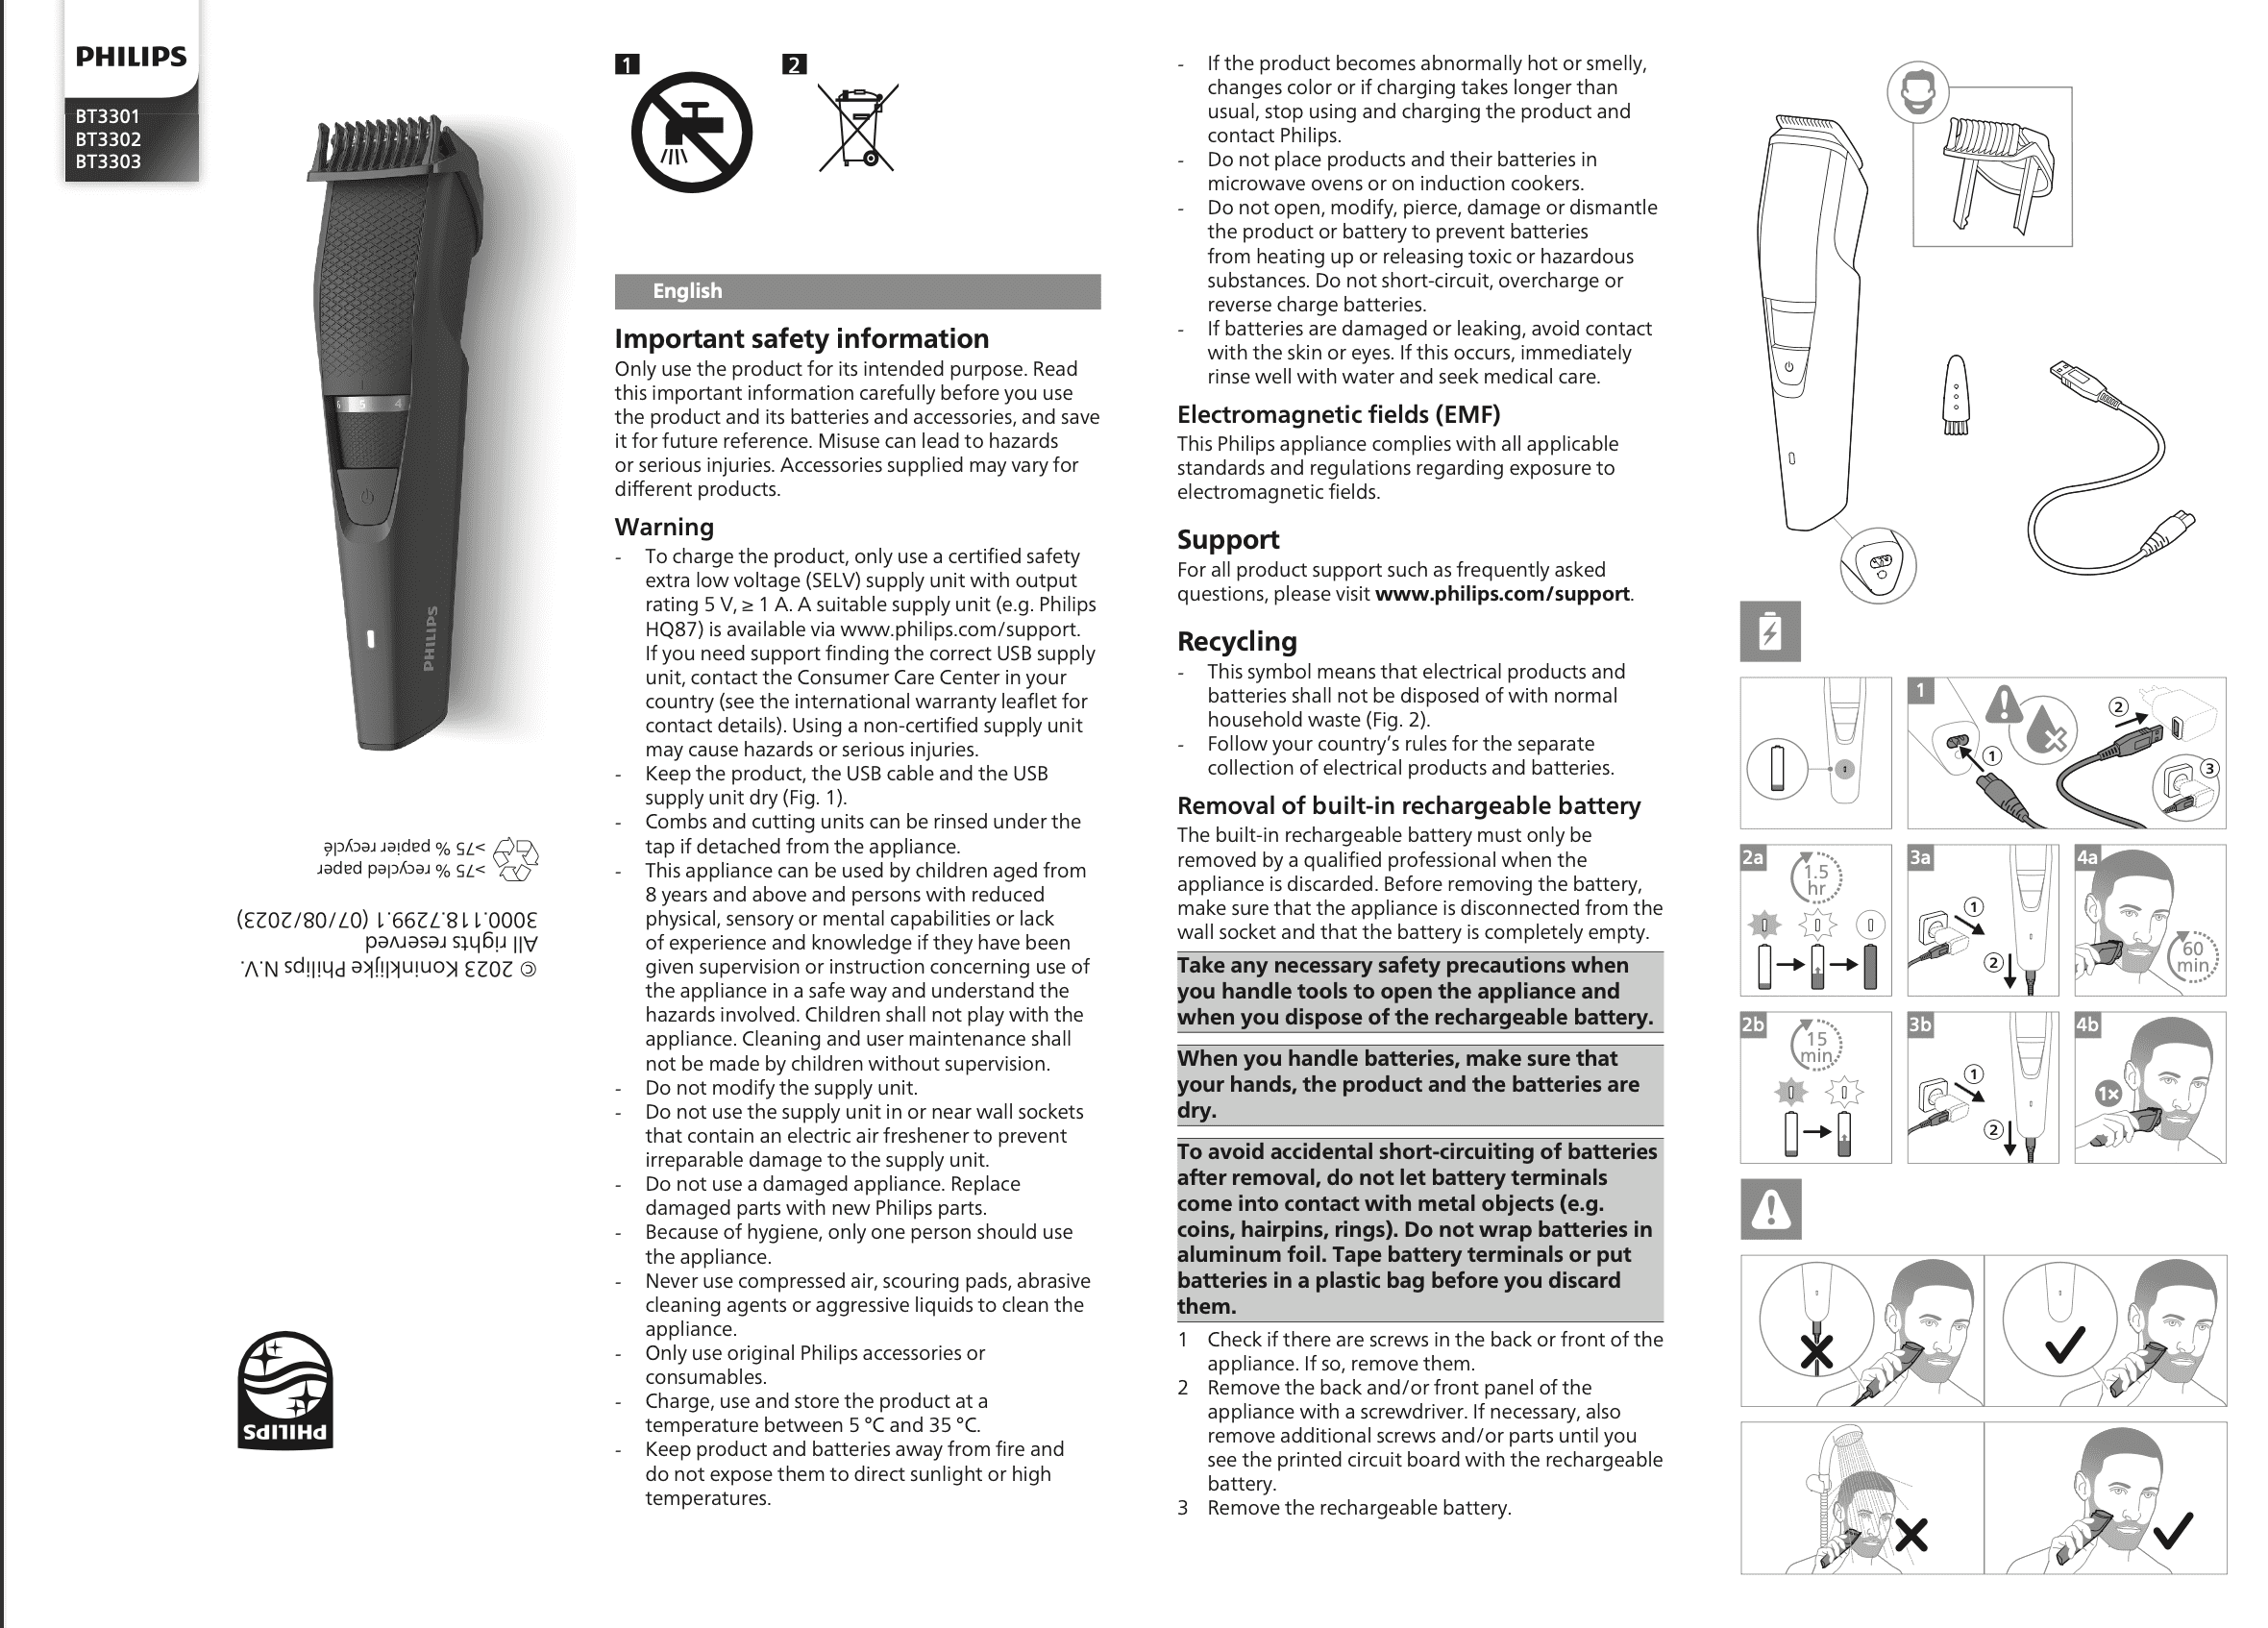 Philips bt3302 15 manual